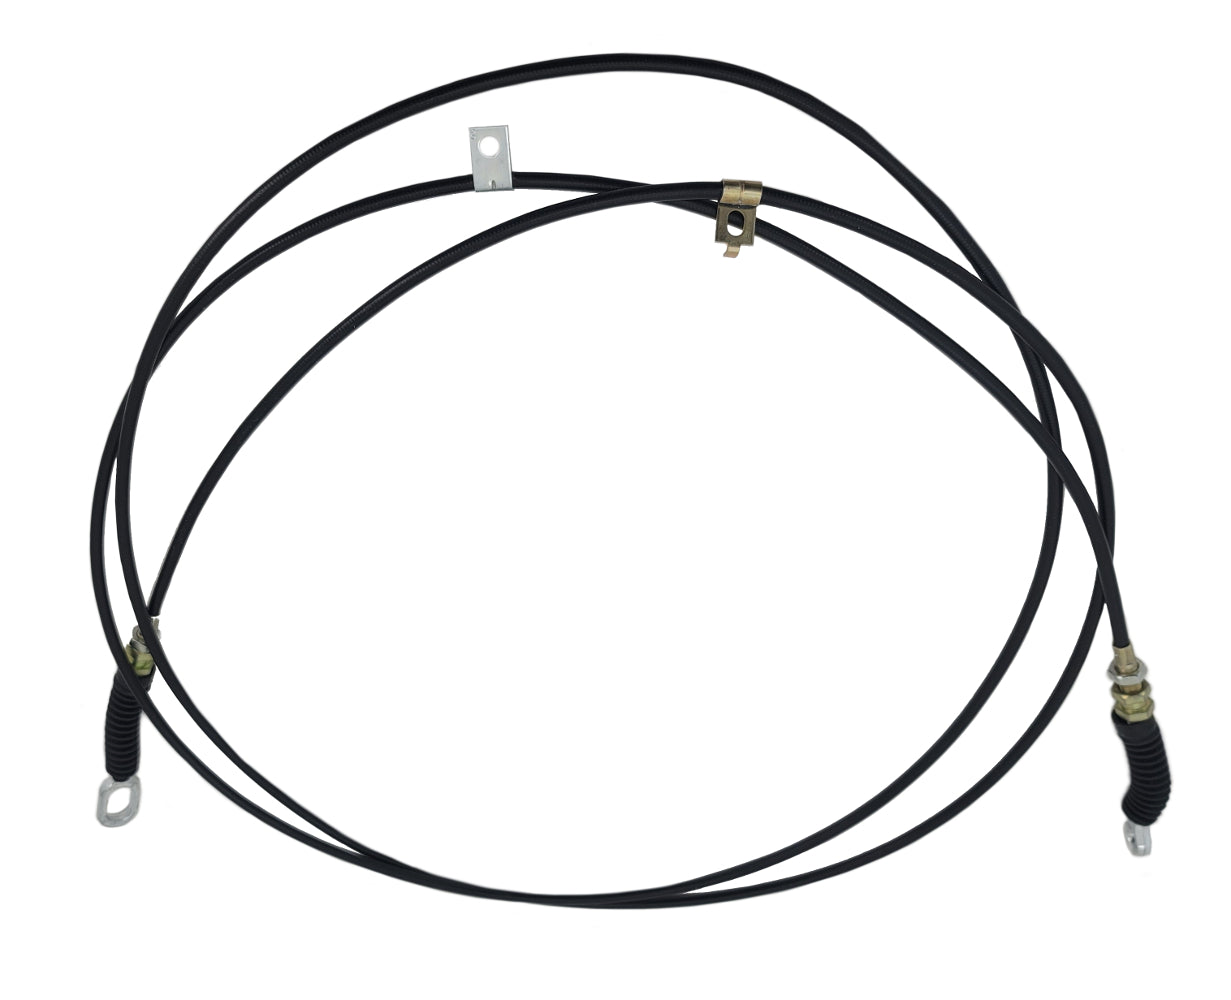 John Deere Original Equipment Cable - AM130238